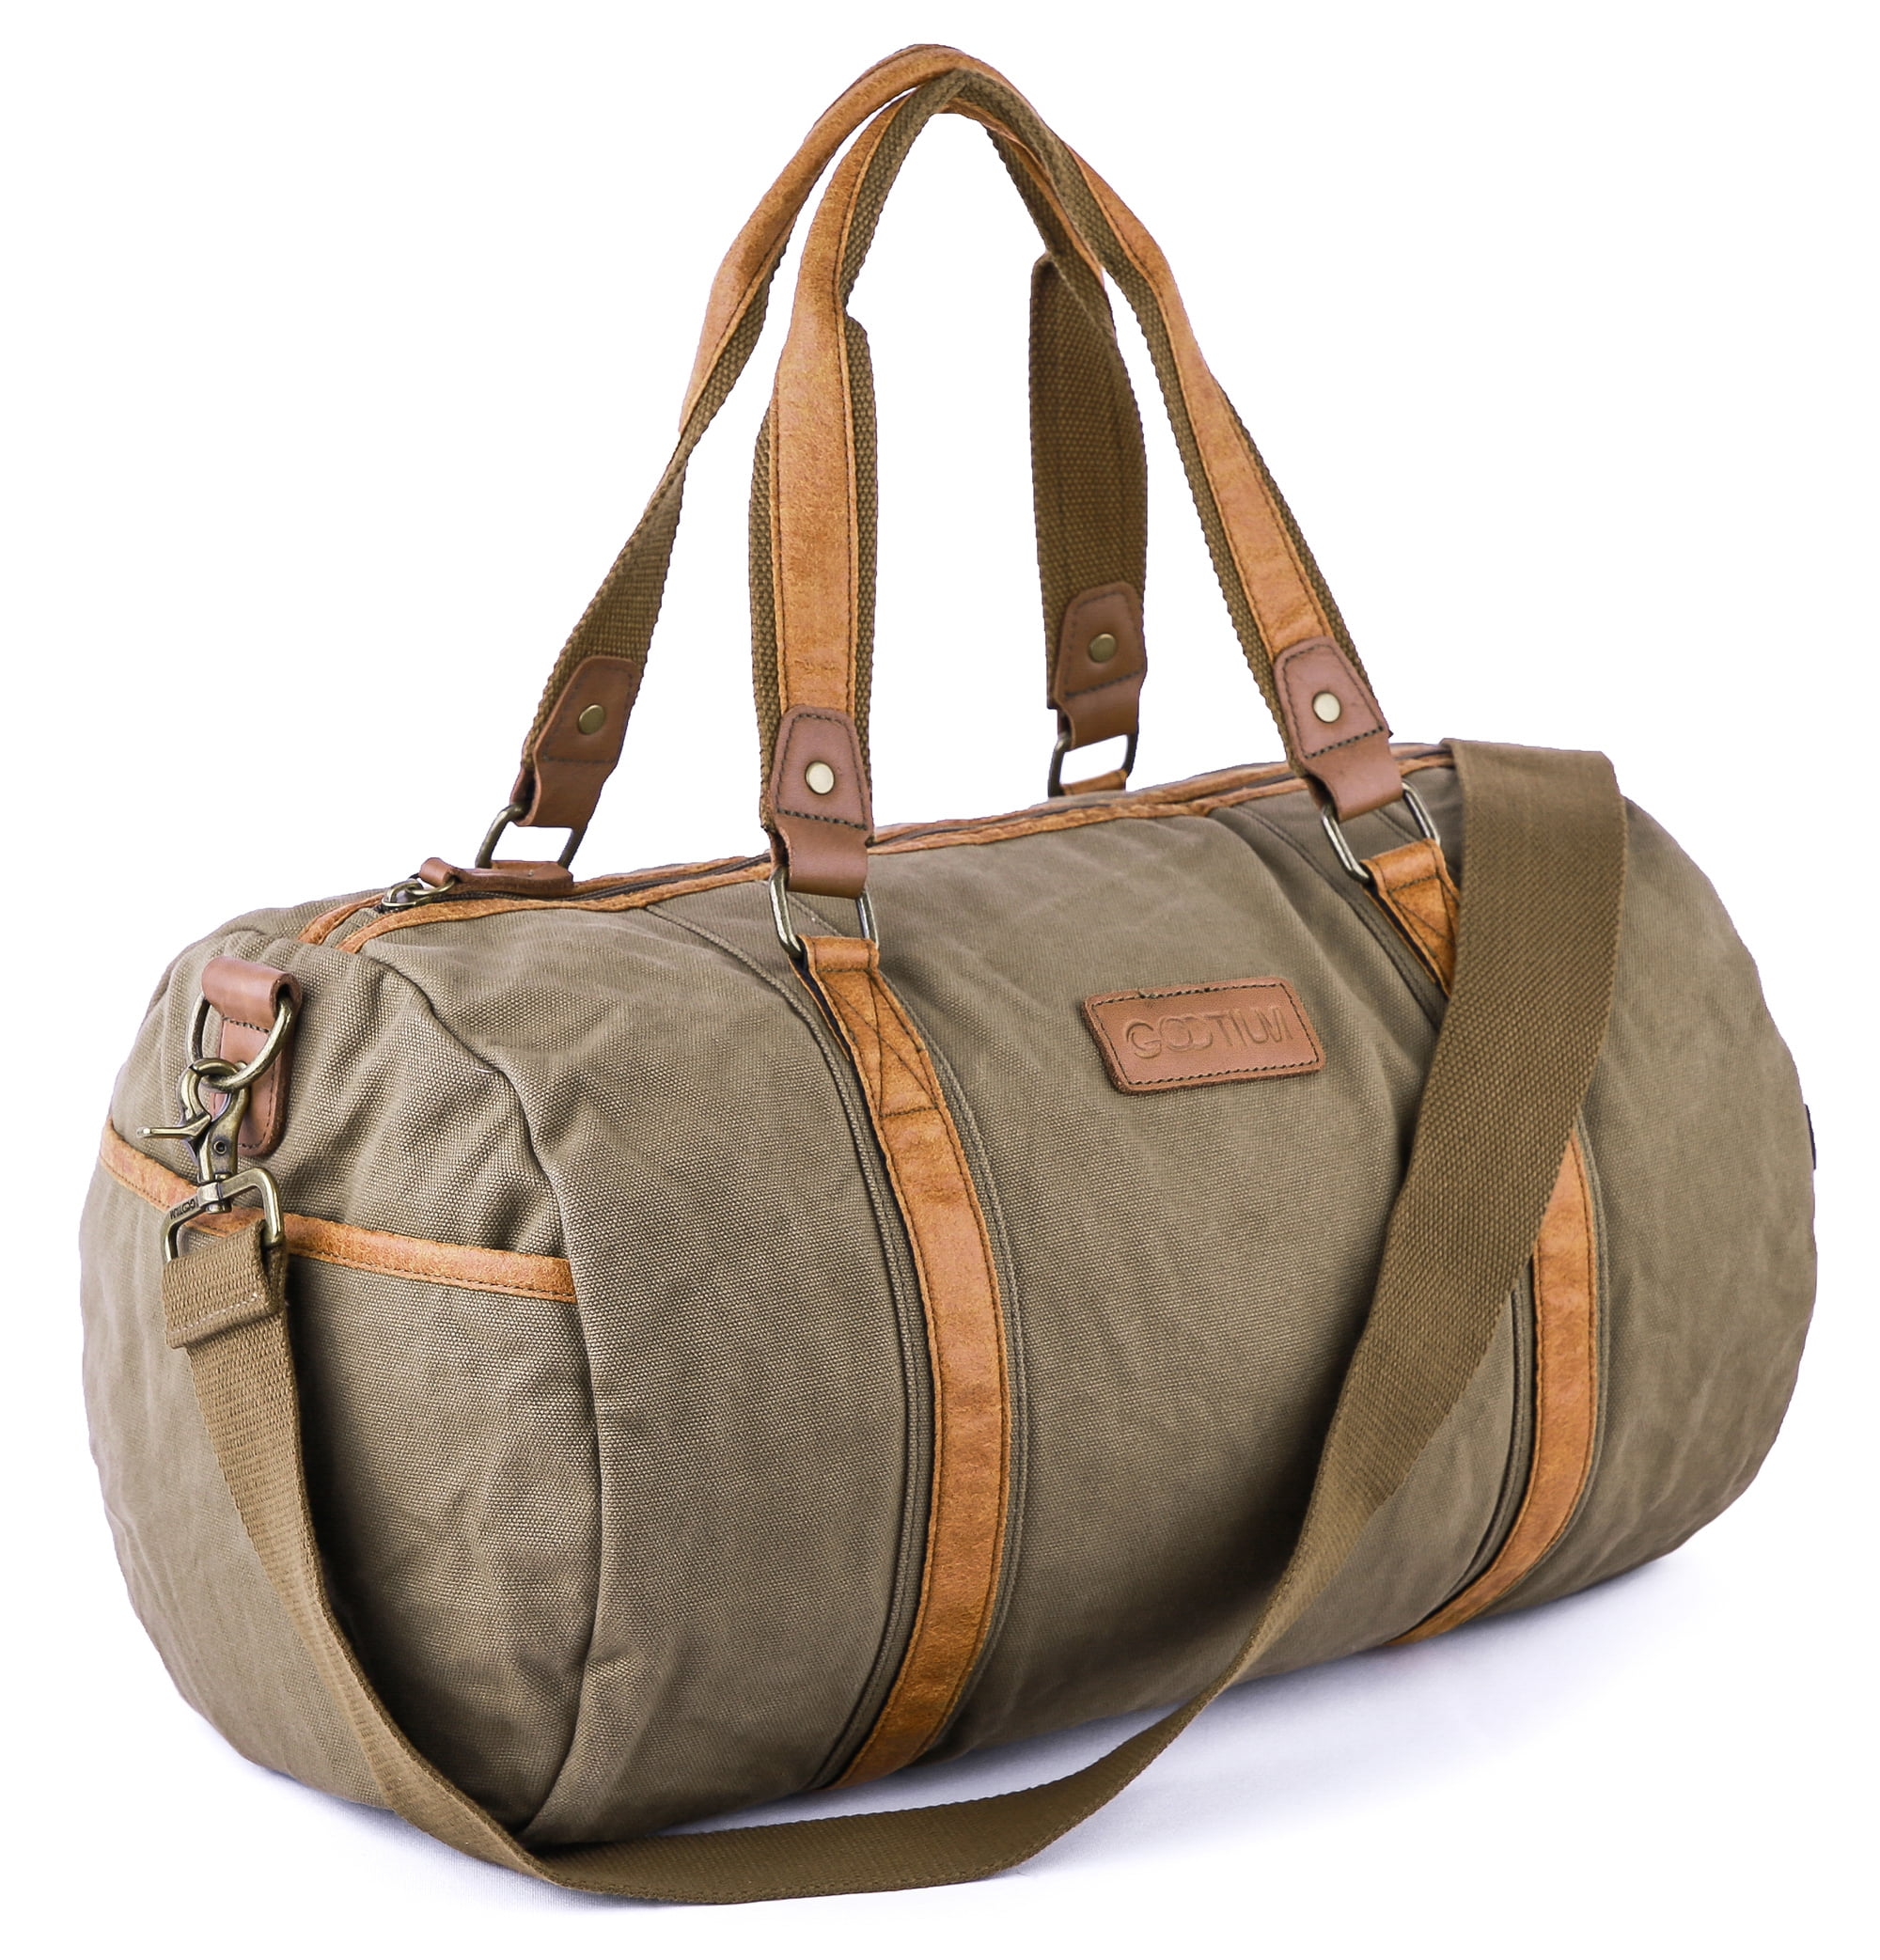 Gootium Canvas Duffel Bag Travel Tote Shoulder Gym Bag Weekend Bag, Army Green - 0 ...